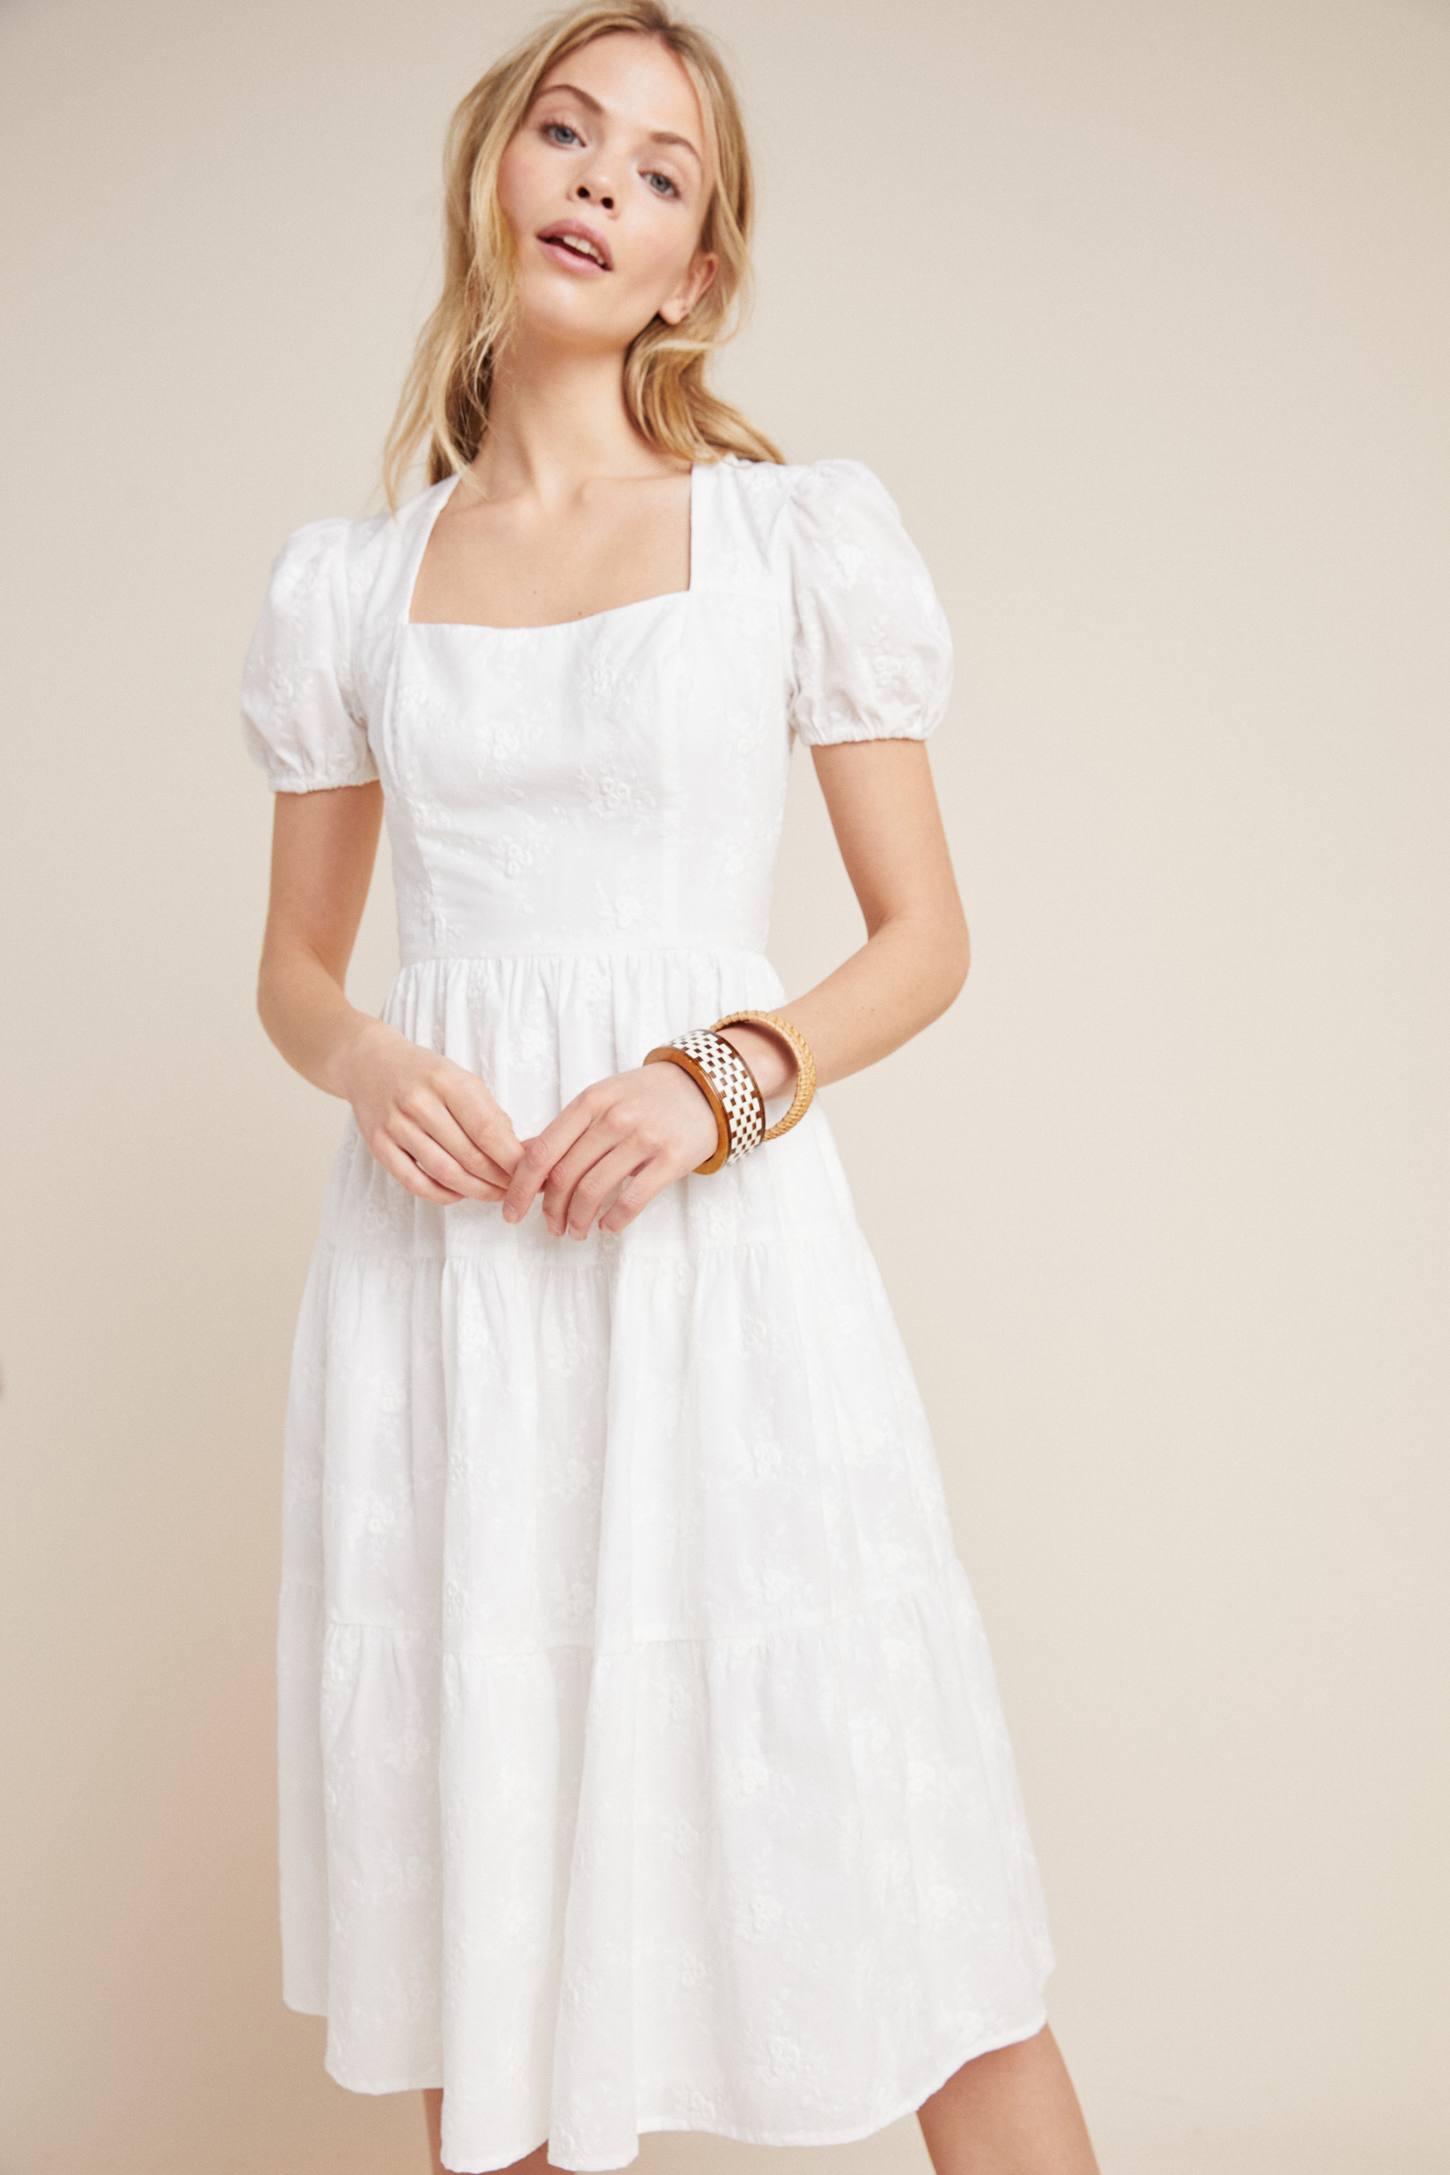 long sleeve midi white dress OFF 66%